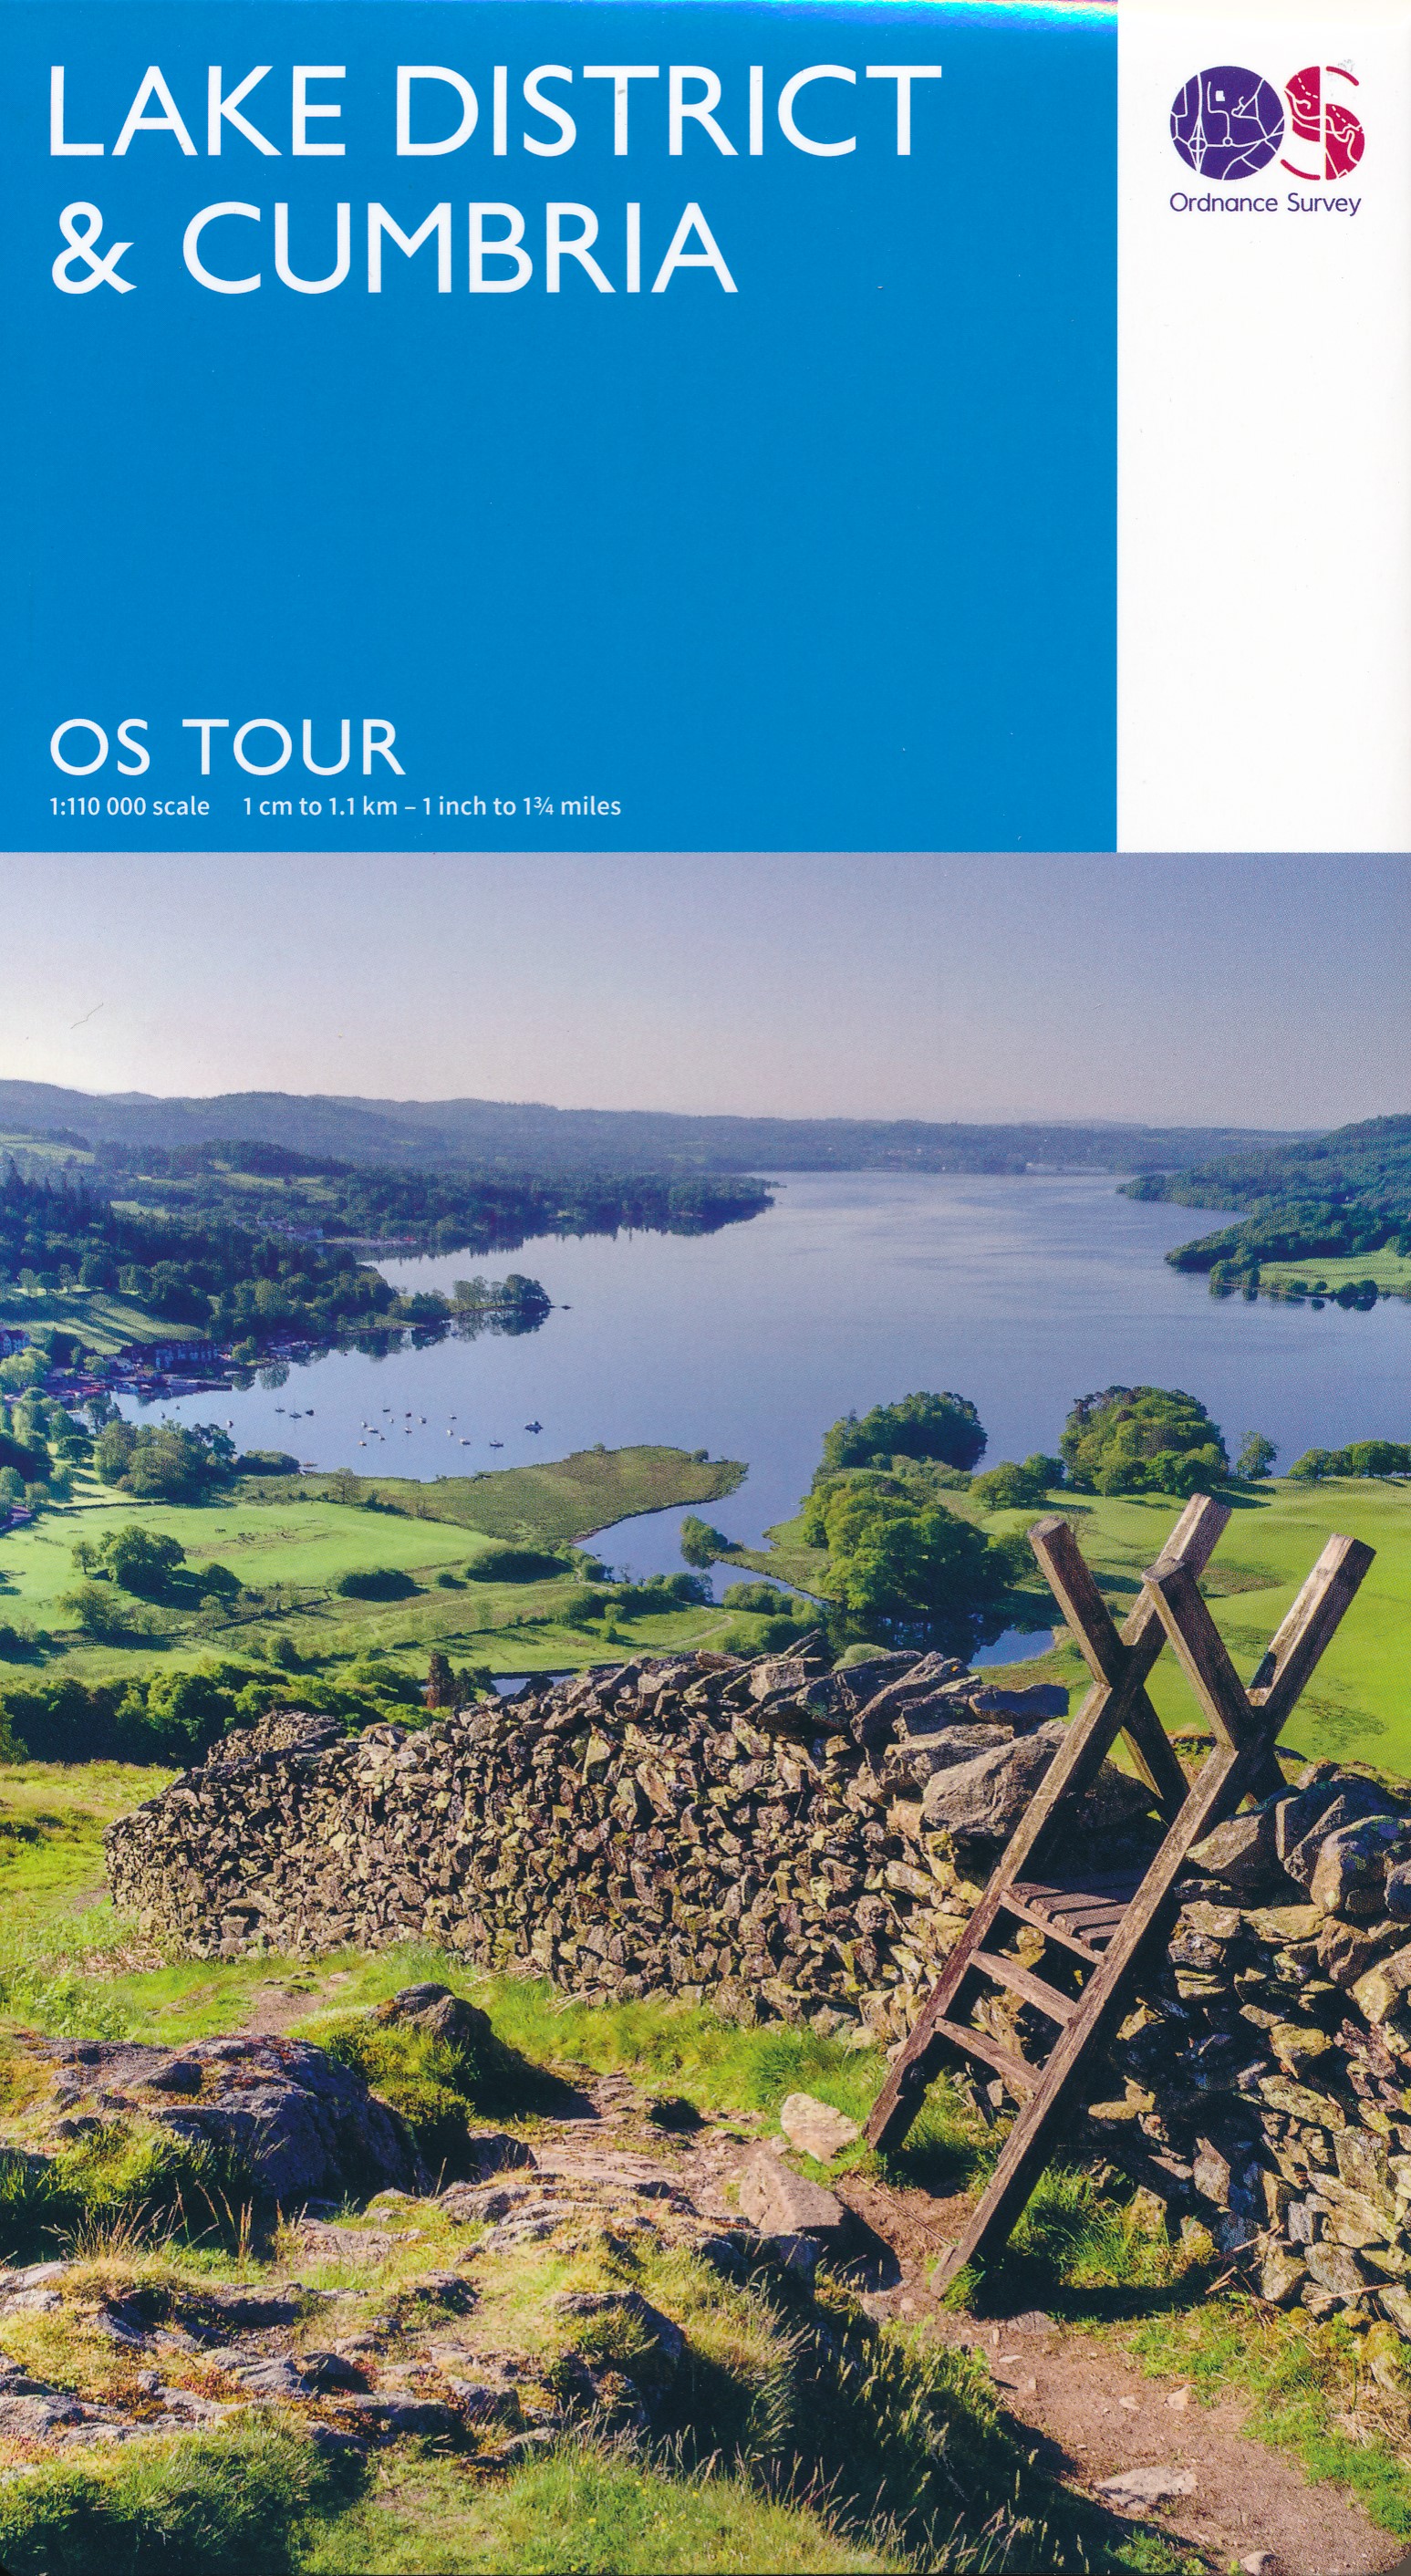 Online bestellen: Fietskaart 03 Tour Map Lake District & Cumbria | Ordnance Survey